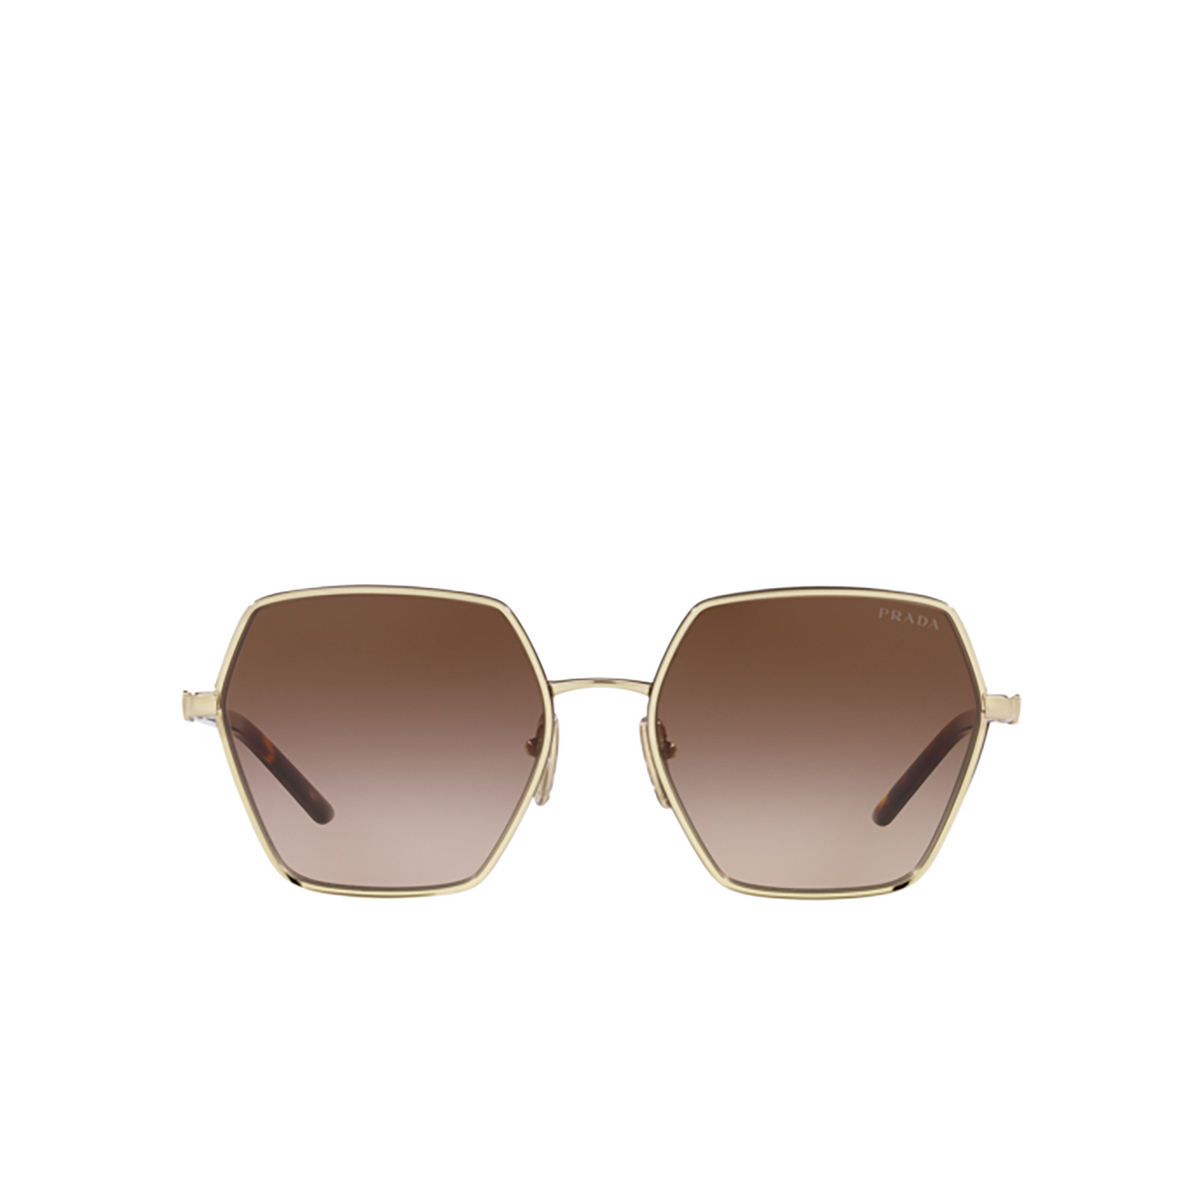 Prada PR 56YS Sunglasses ZVN6S1 Pale Gold - front view